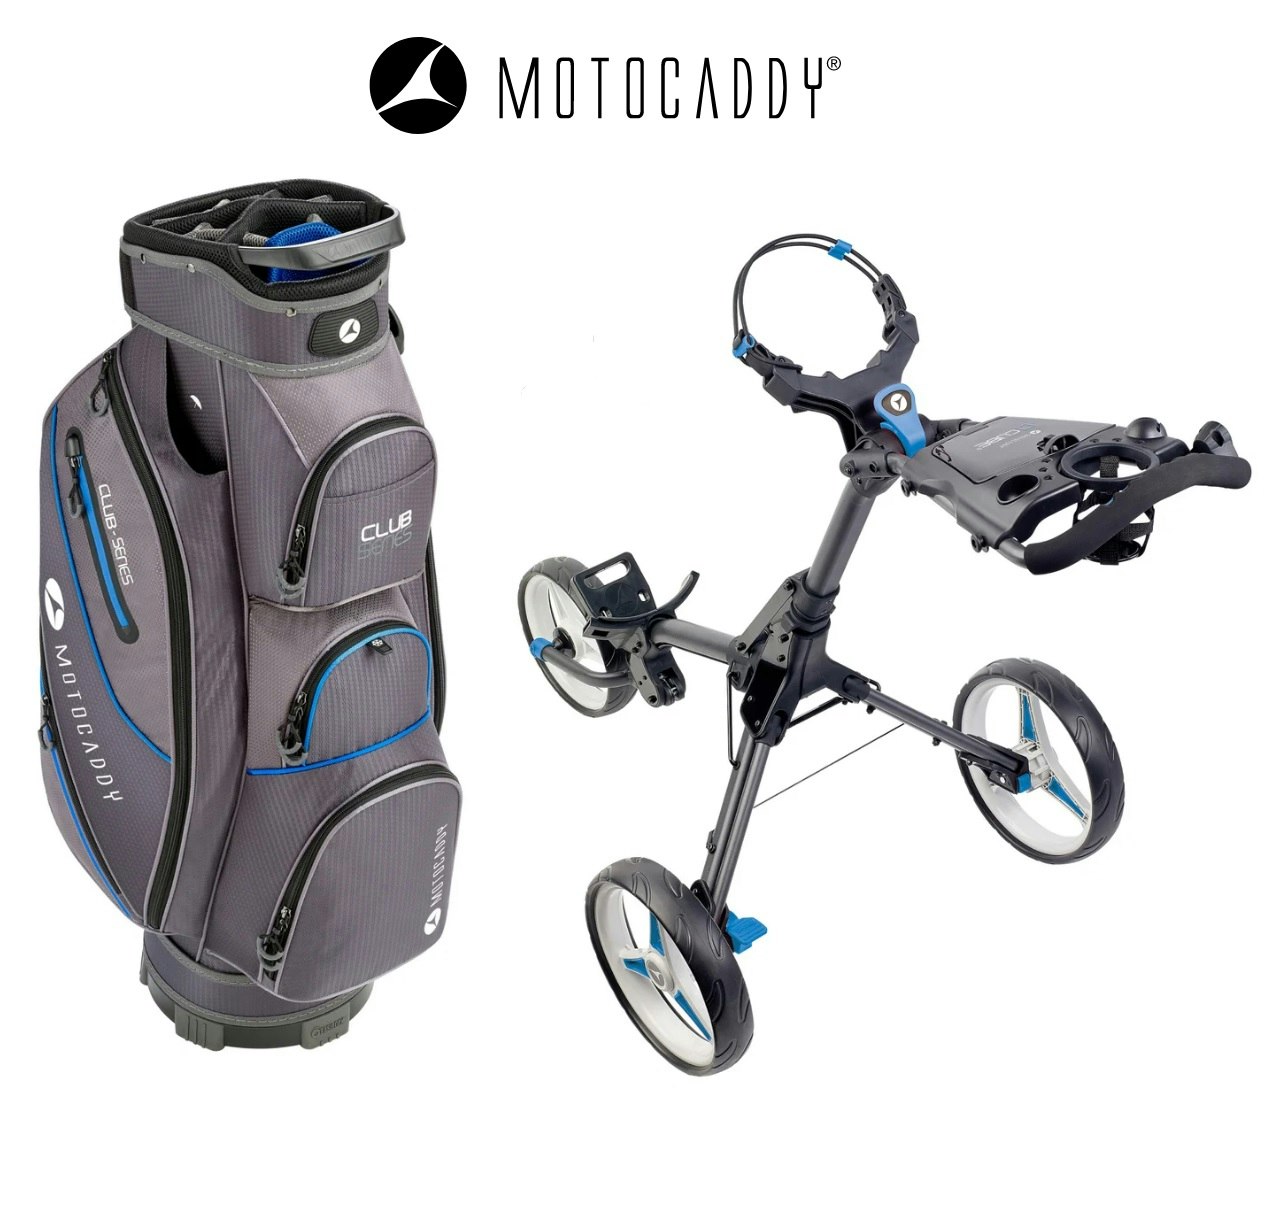 Motocaddy Cube + Motocaddy Club-Series Cartbag